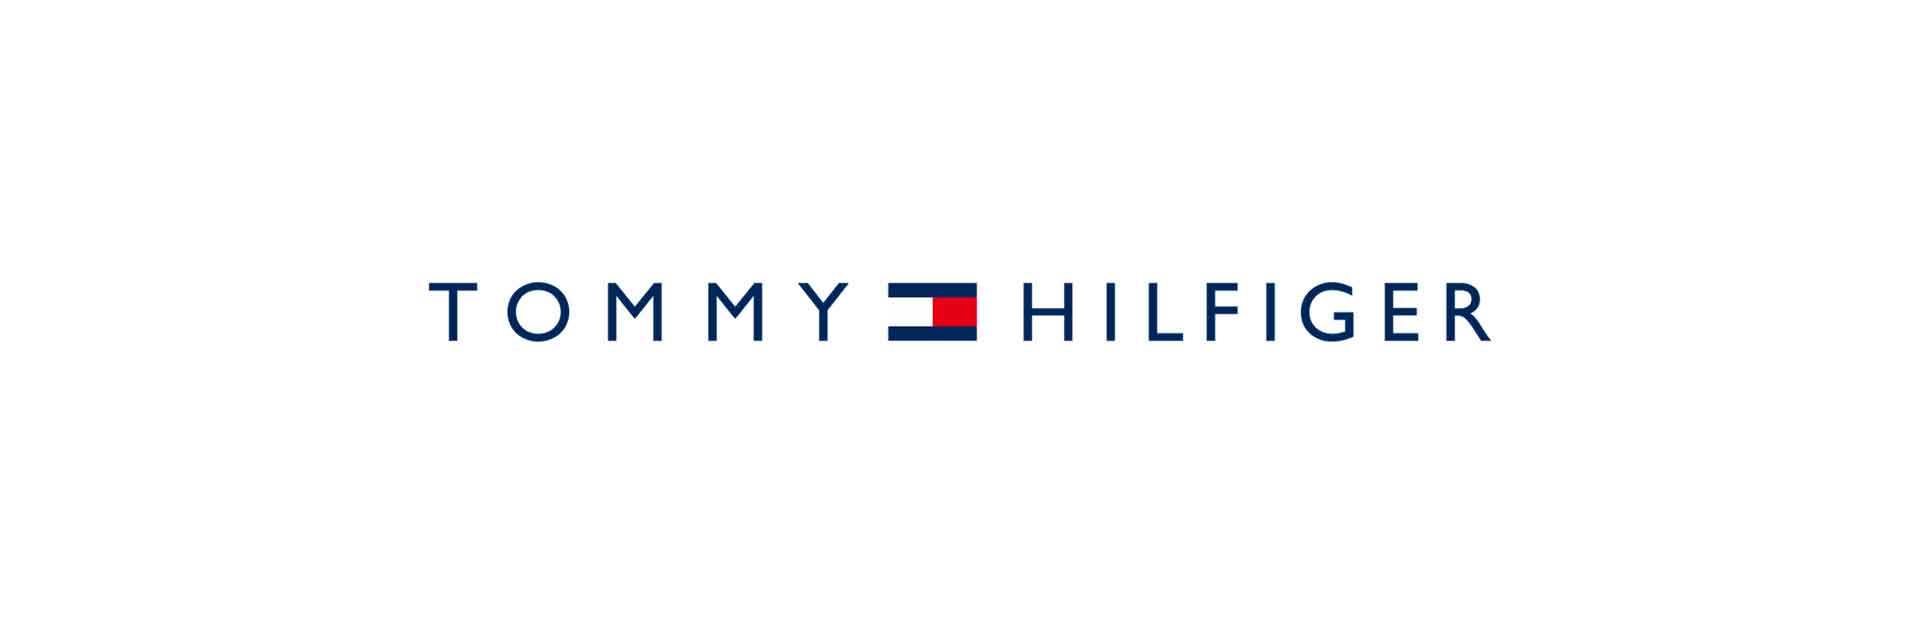 Tommy Hilfiger - The best brands only on - Torino Outlet Village